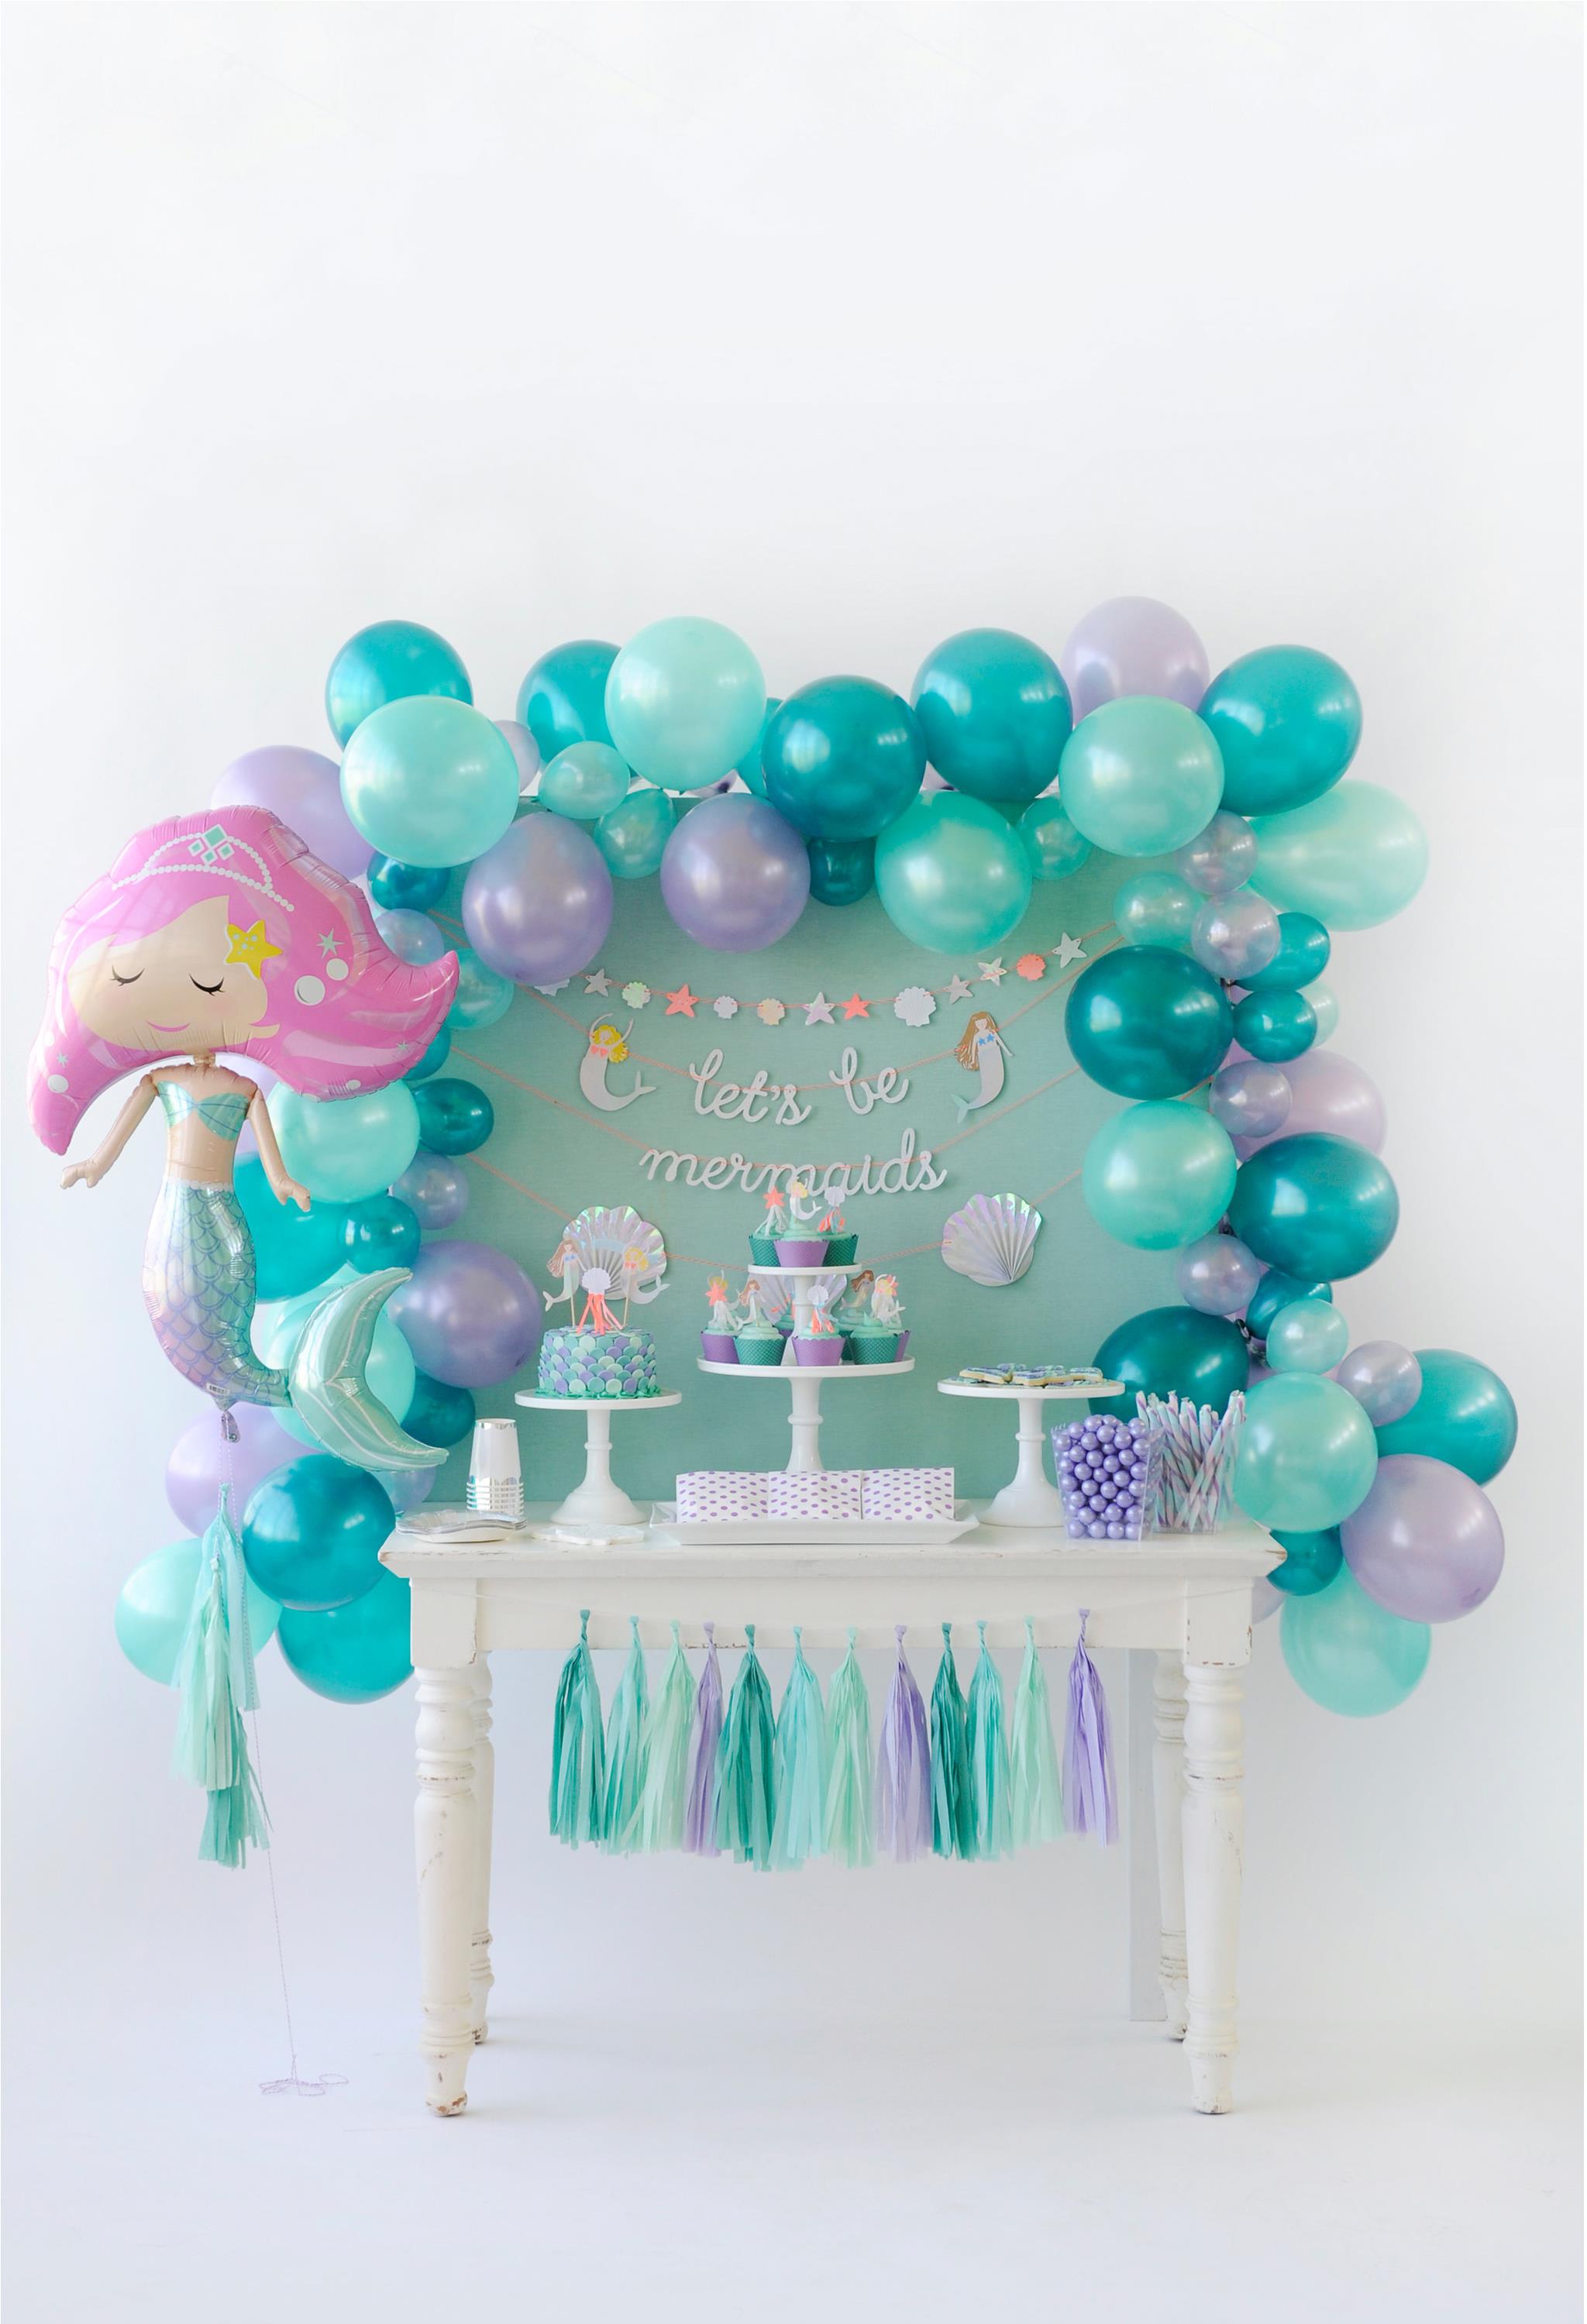 Mermaid Party Ideas - Project Nursery